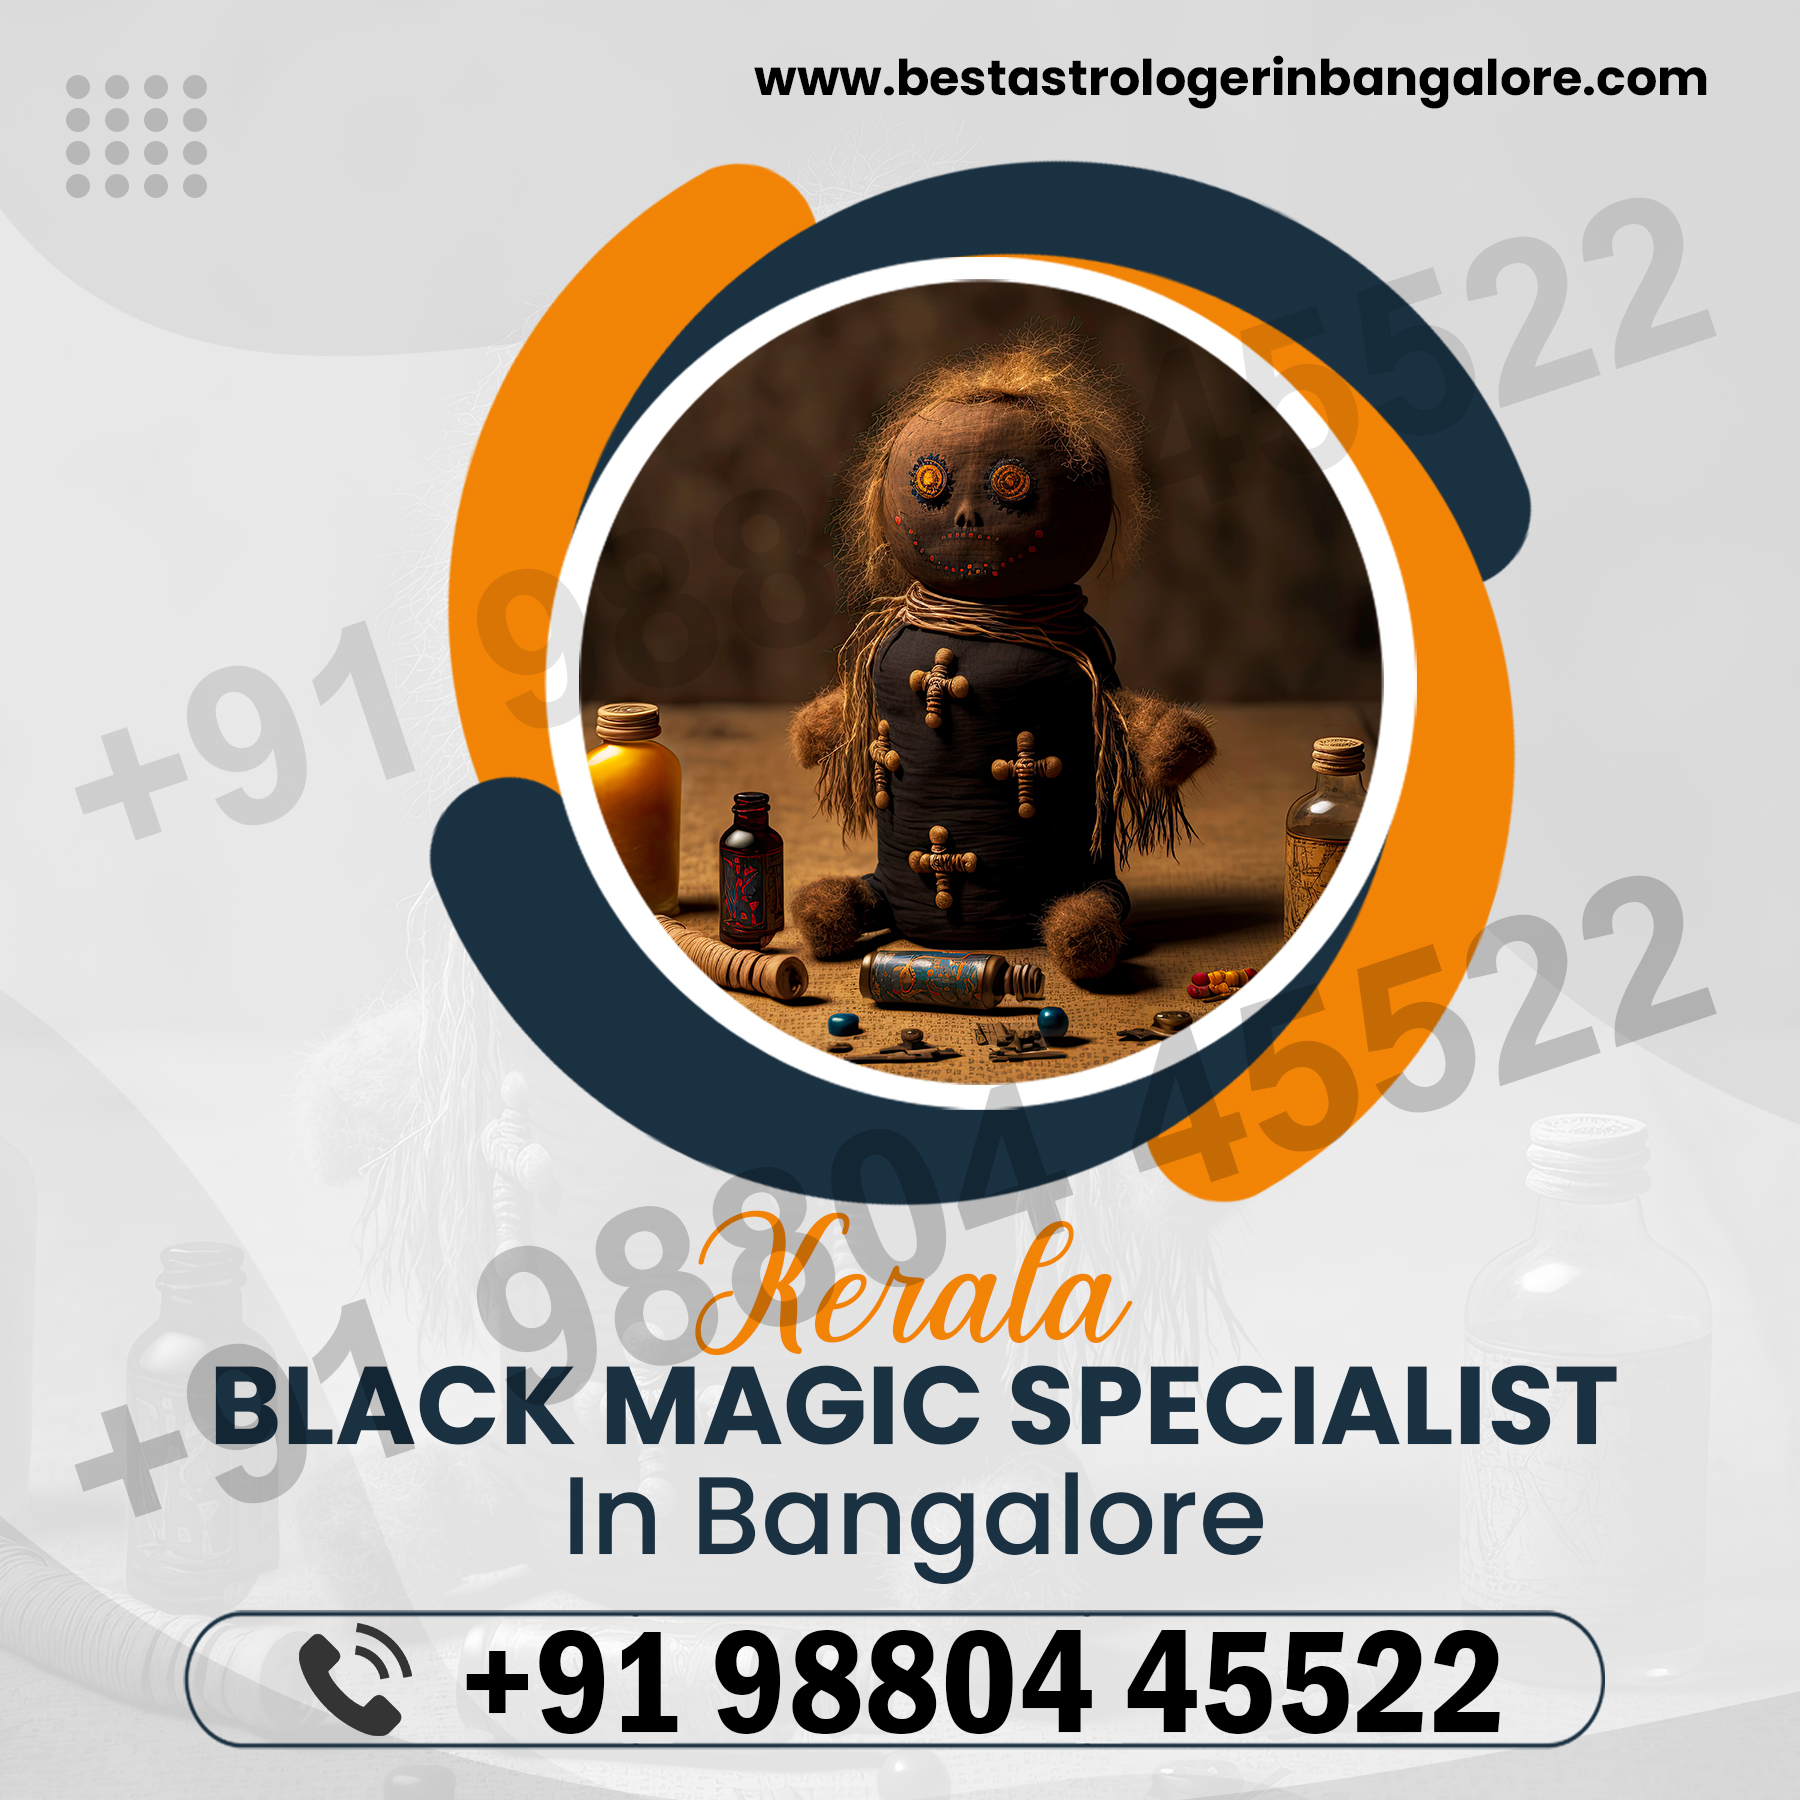 Kerala Black Magic Specialist in Bangalore